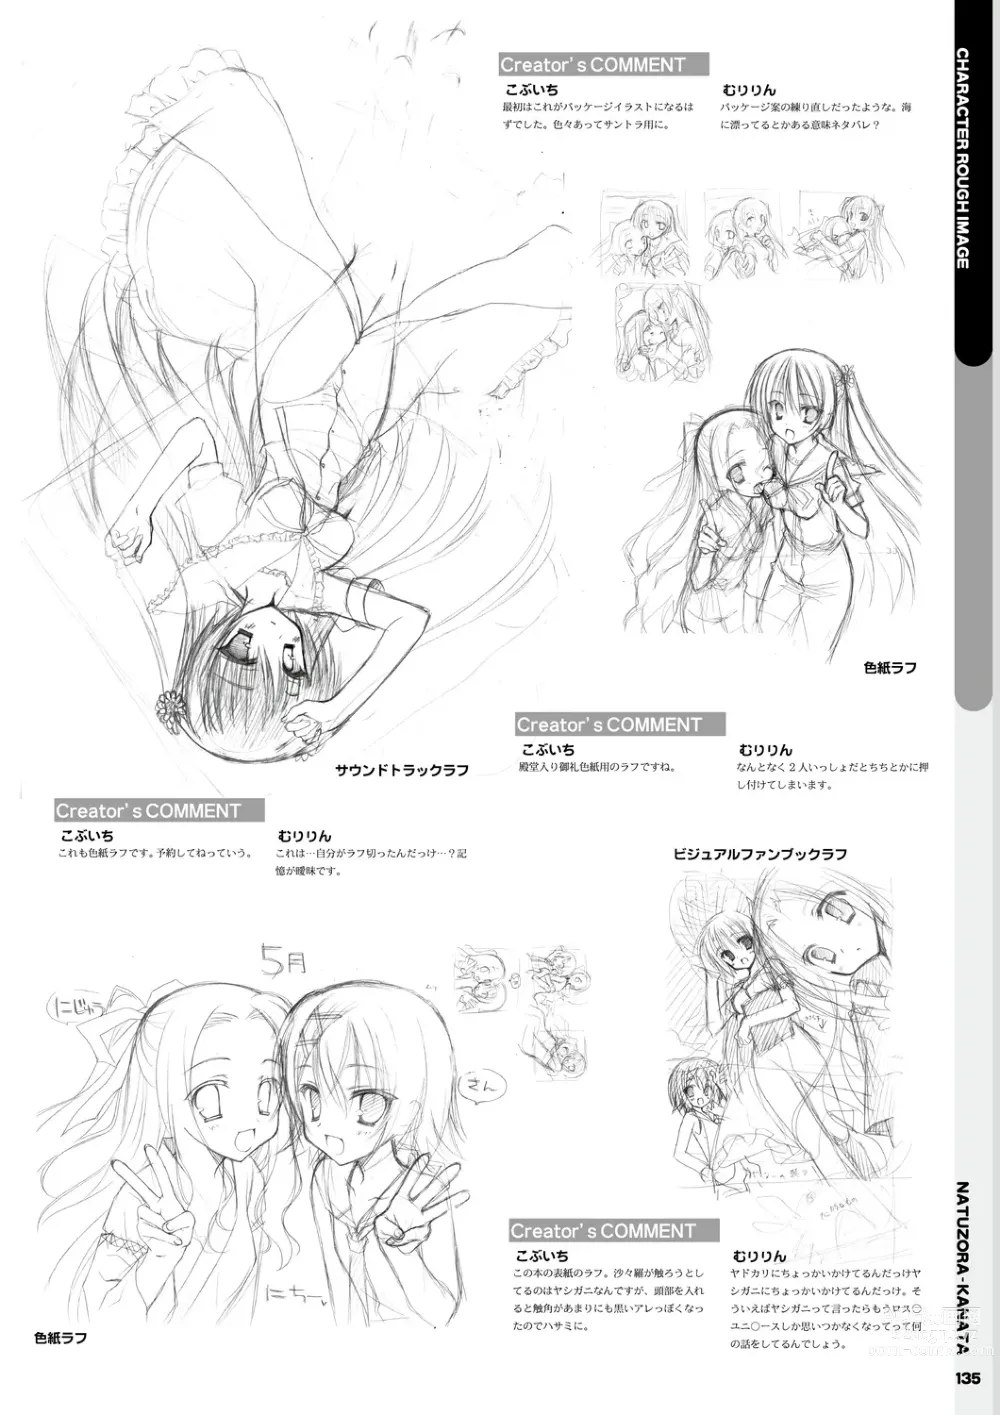 Page 137 of manga Natsuzora Kanata Official Visual Fan Book